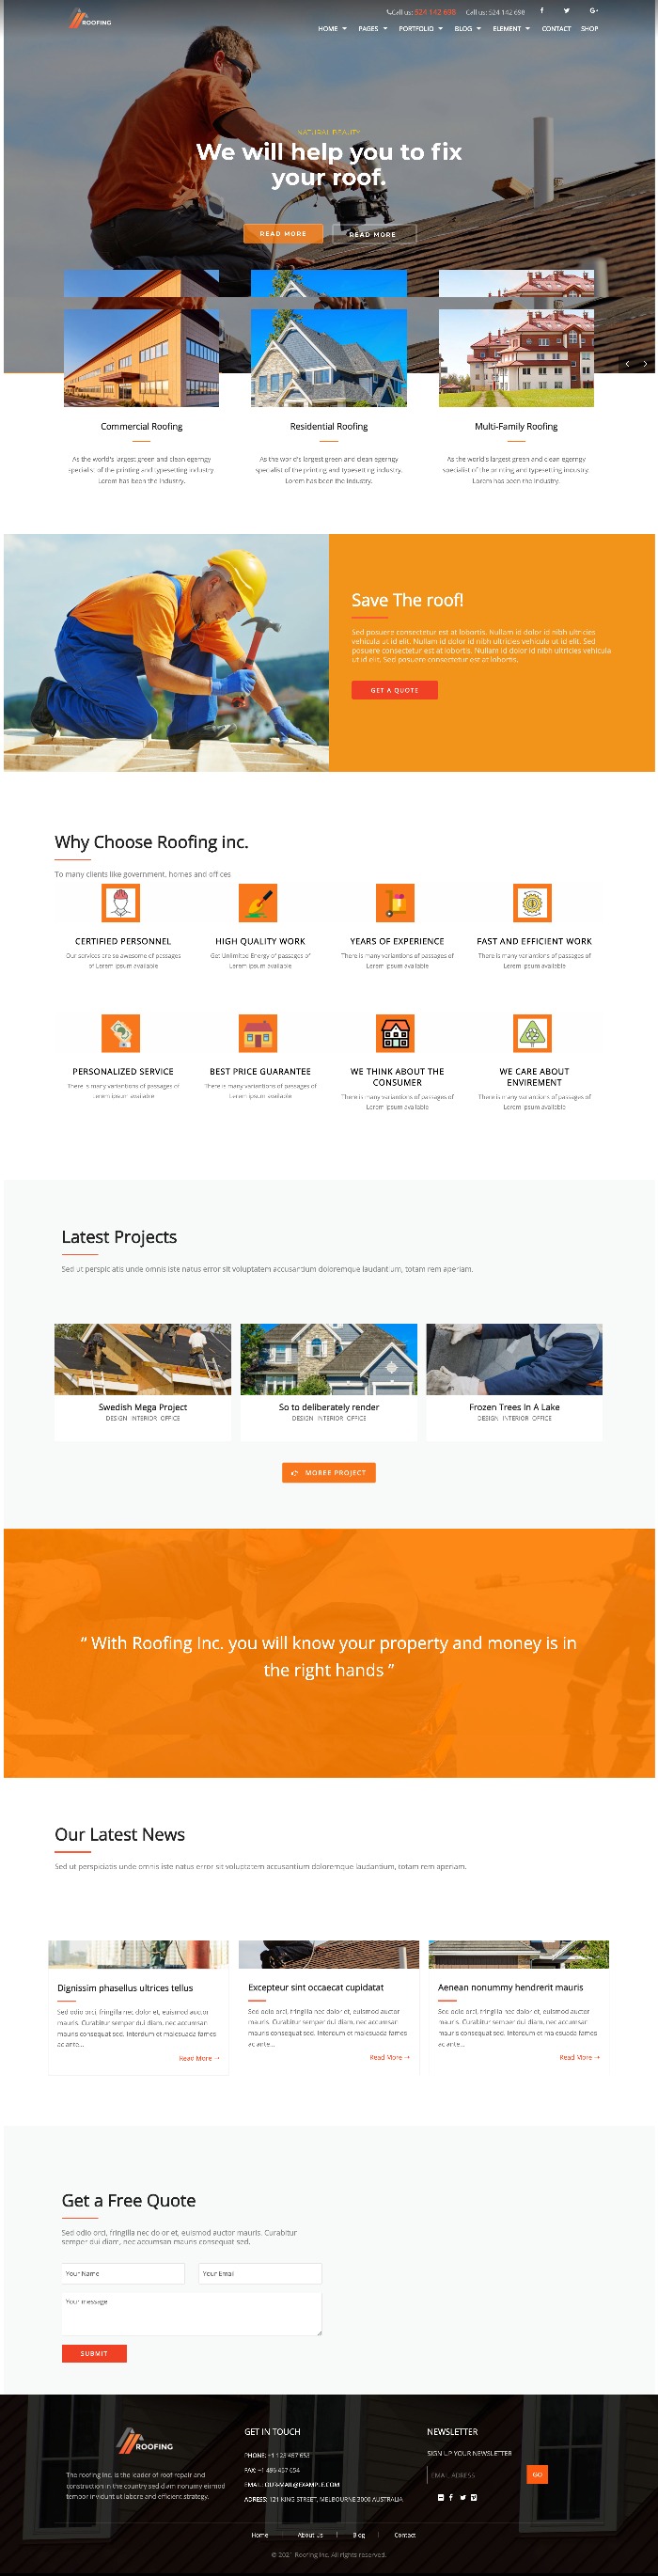 Mẫu Website Giới Thiệu Dịch Vụ Sửa Chữa Cải Tạo Nhà Roofing Home 2